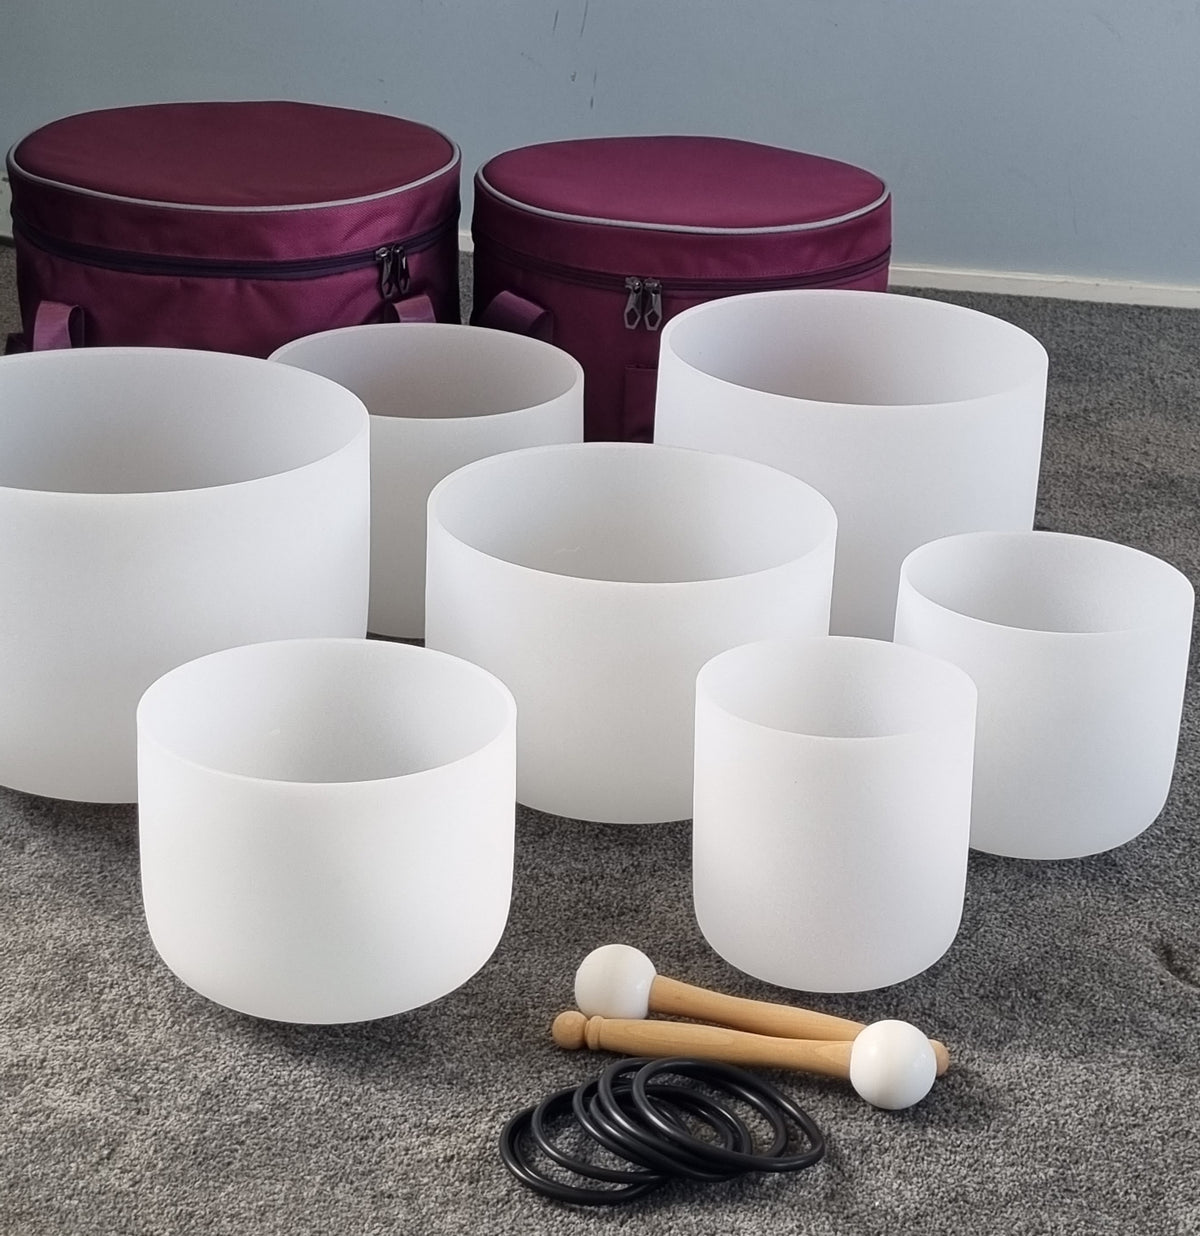 Full Set of 7 White Quartz Crystal Singing Bowls with Symbols